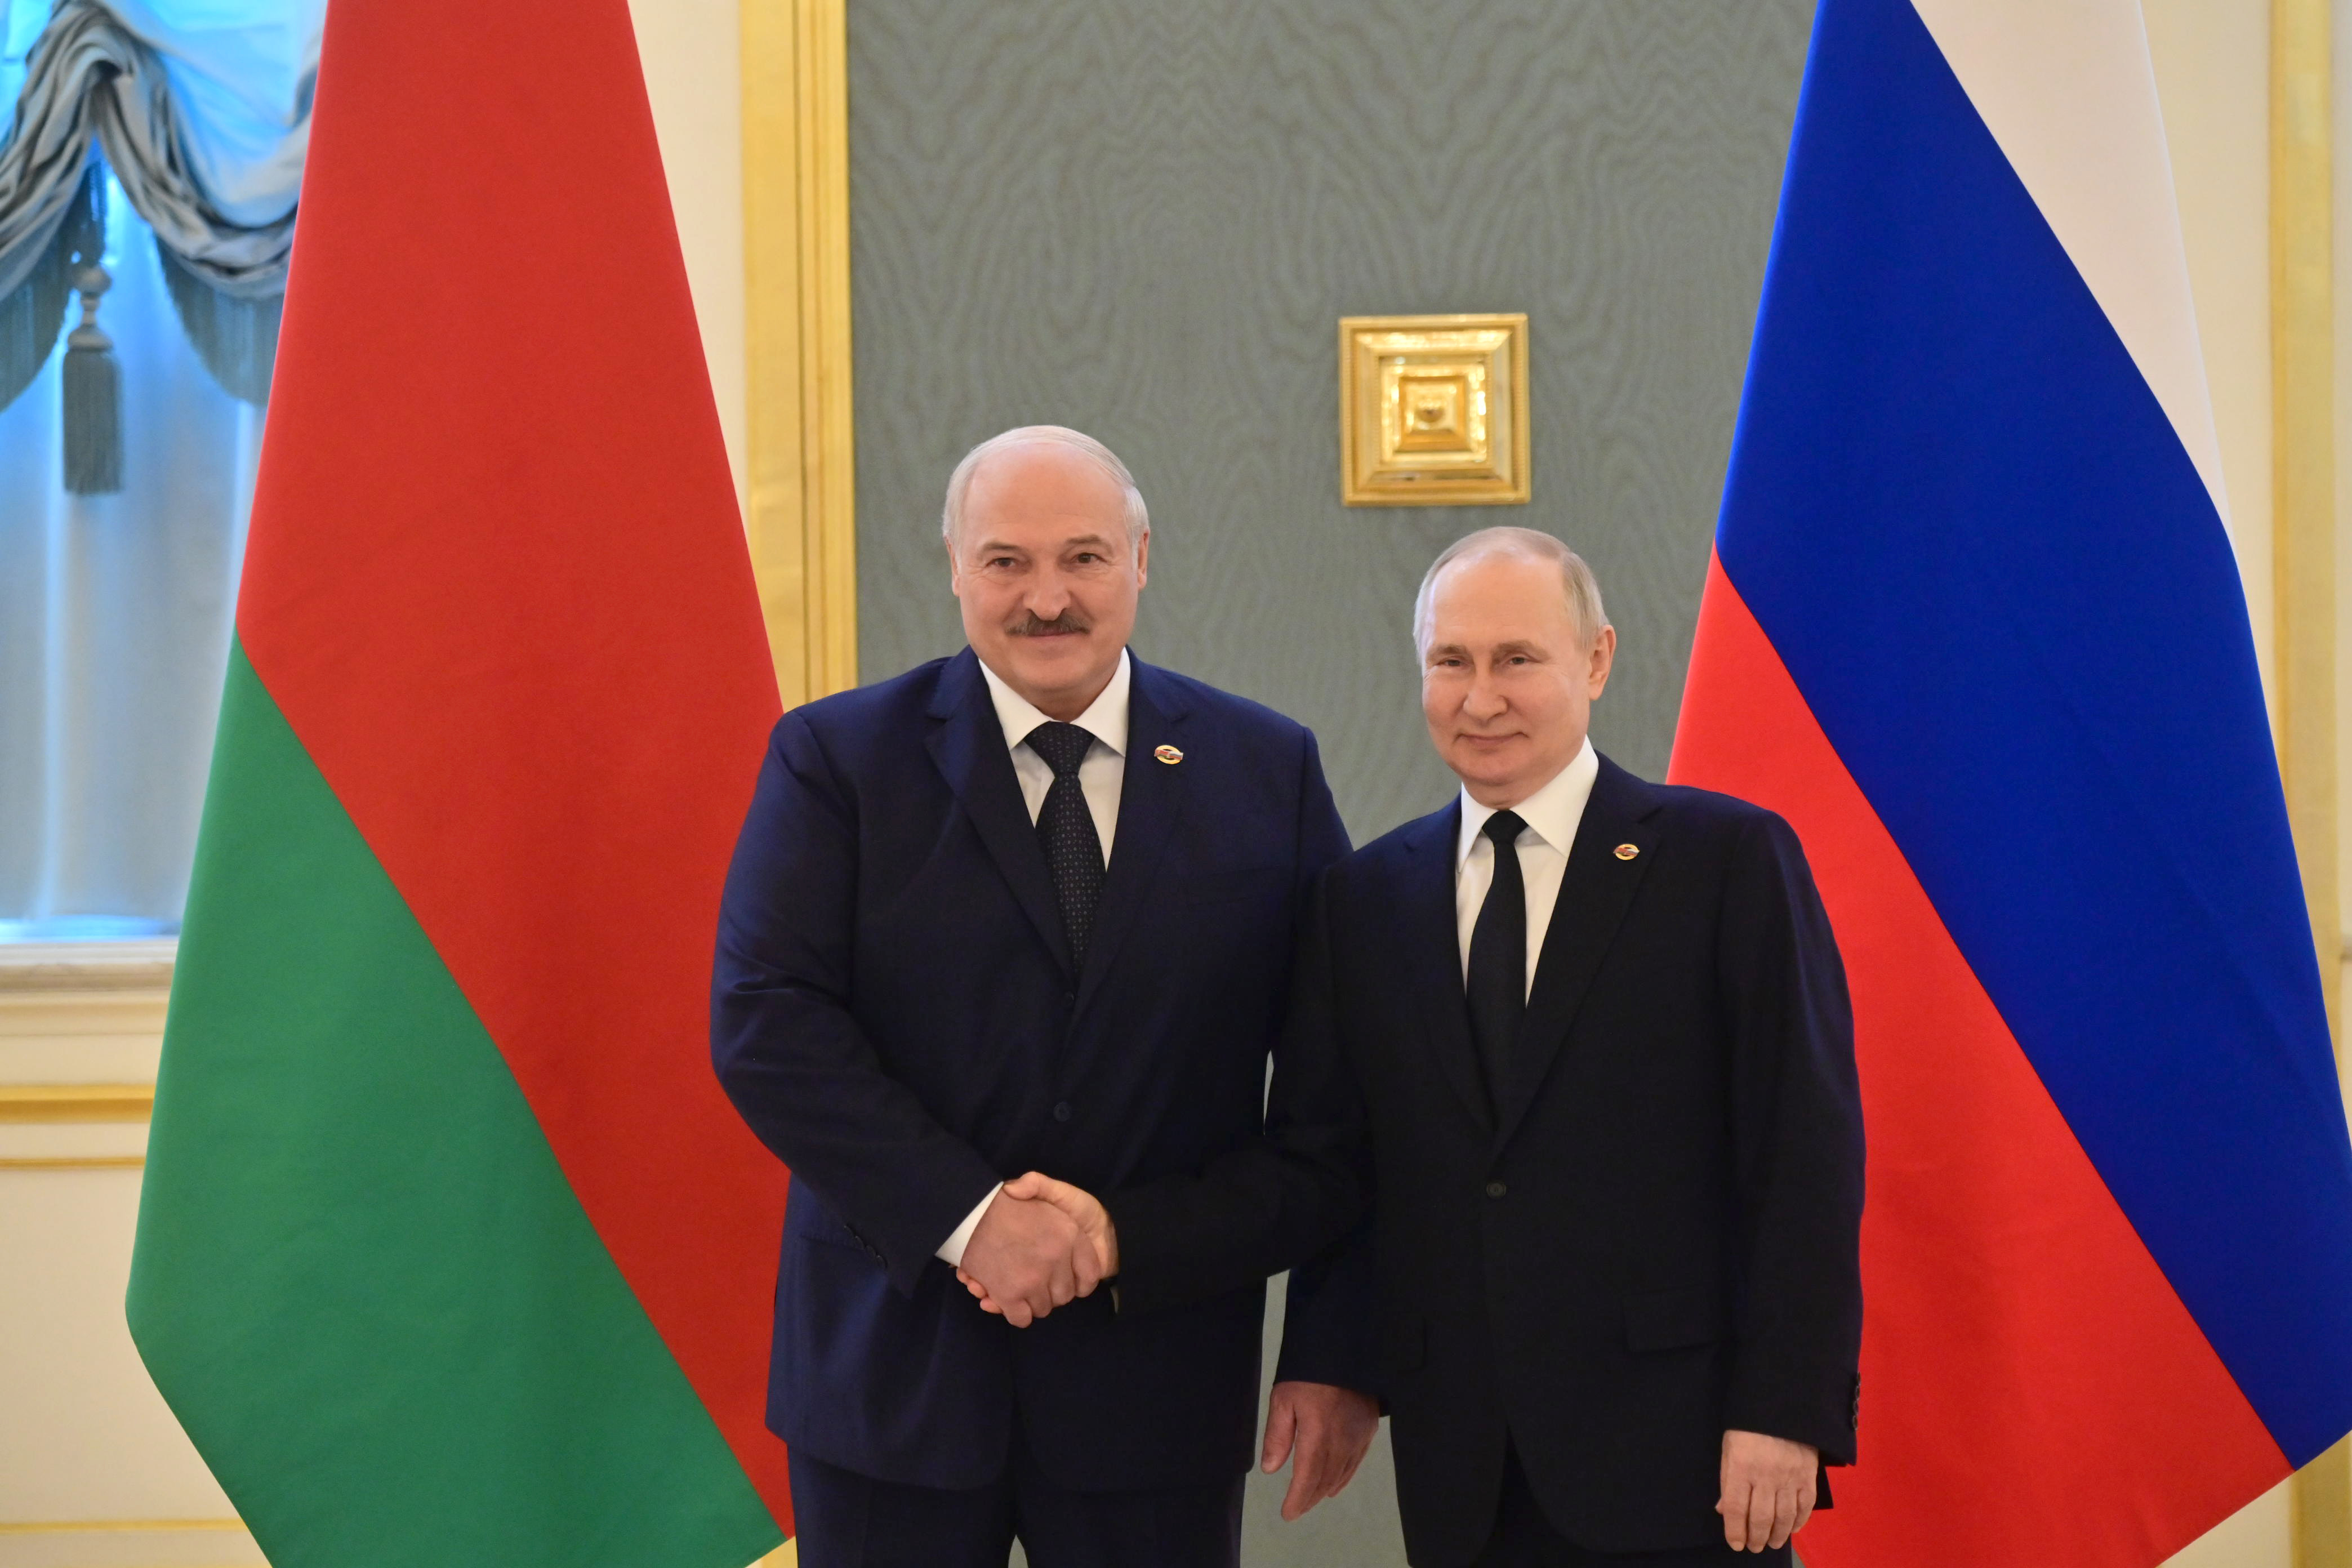 Alexander Lukashenko and Vladimir Putin Source: Press Service of the President of the Republic of Belarus 